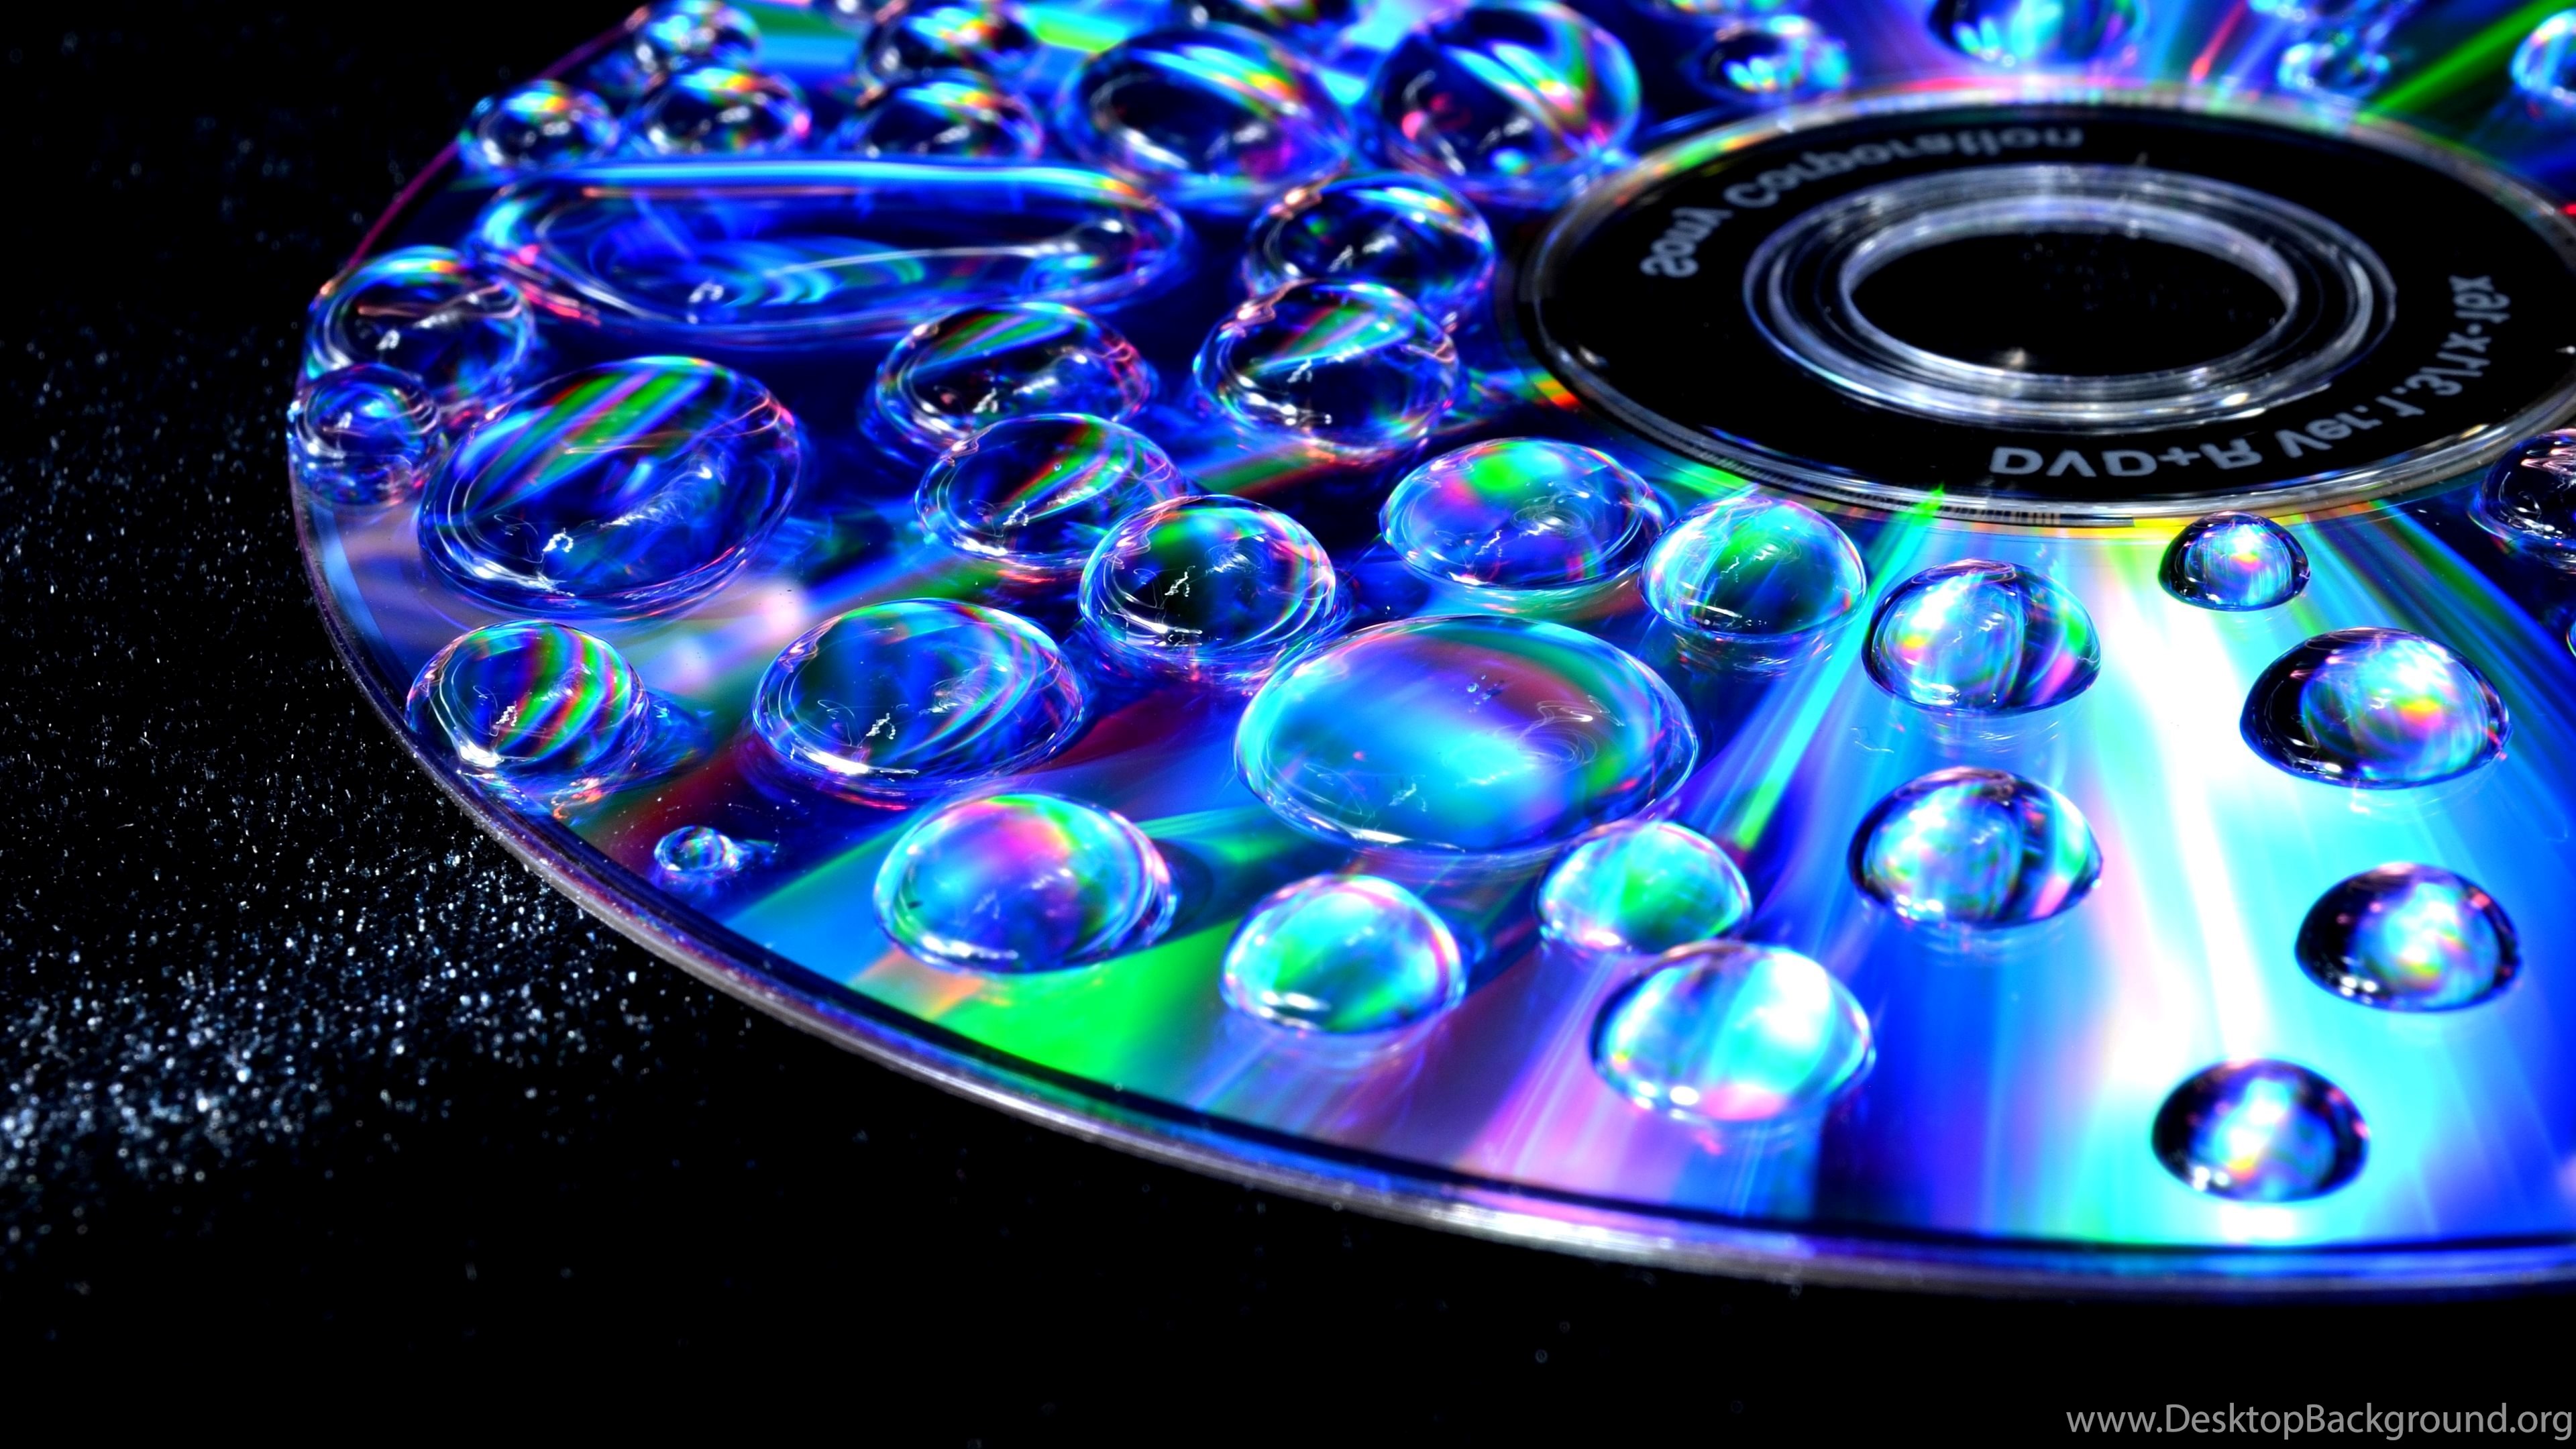 Water Drops On A CD HD Wallpapers. 4K Wallpapers Desktop Background